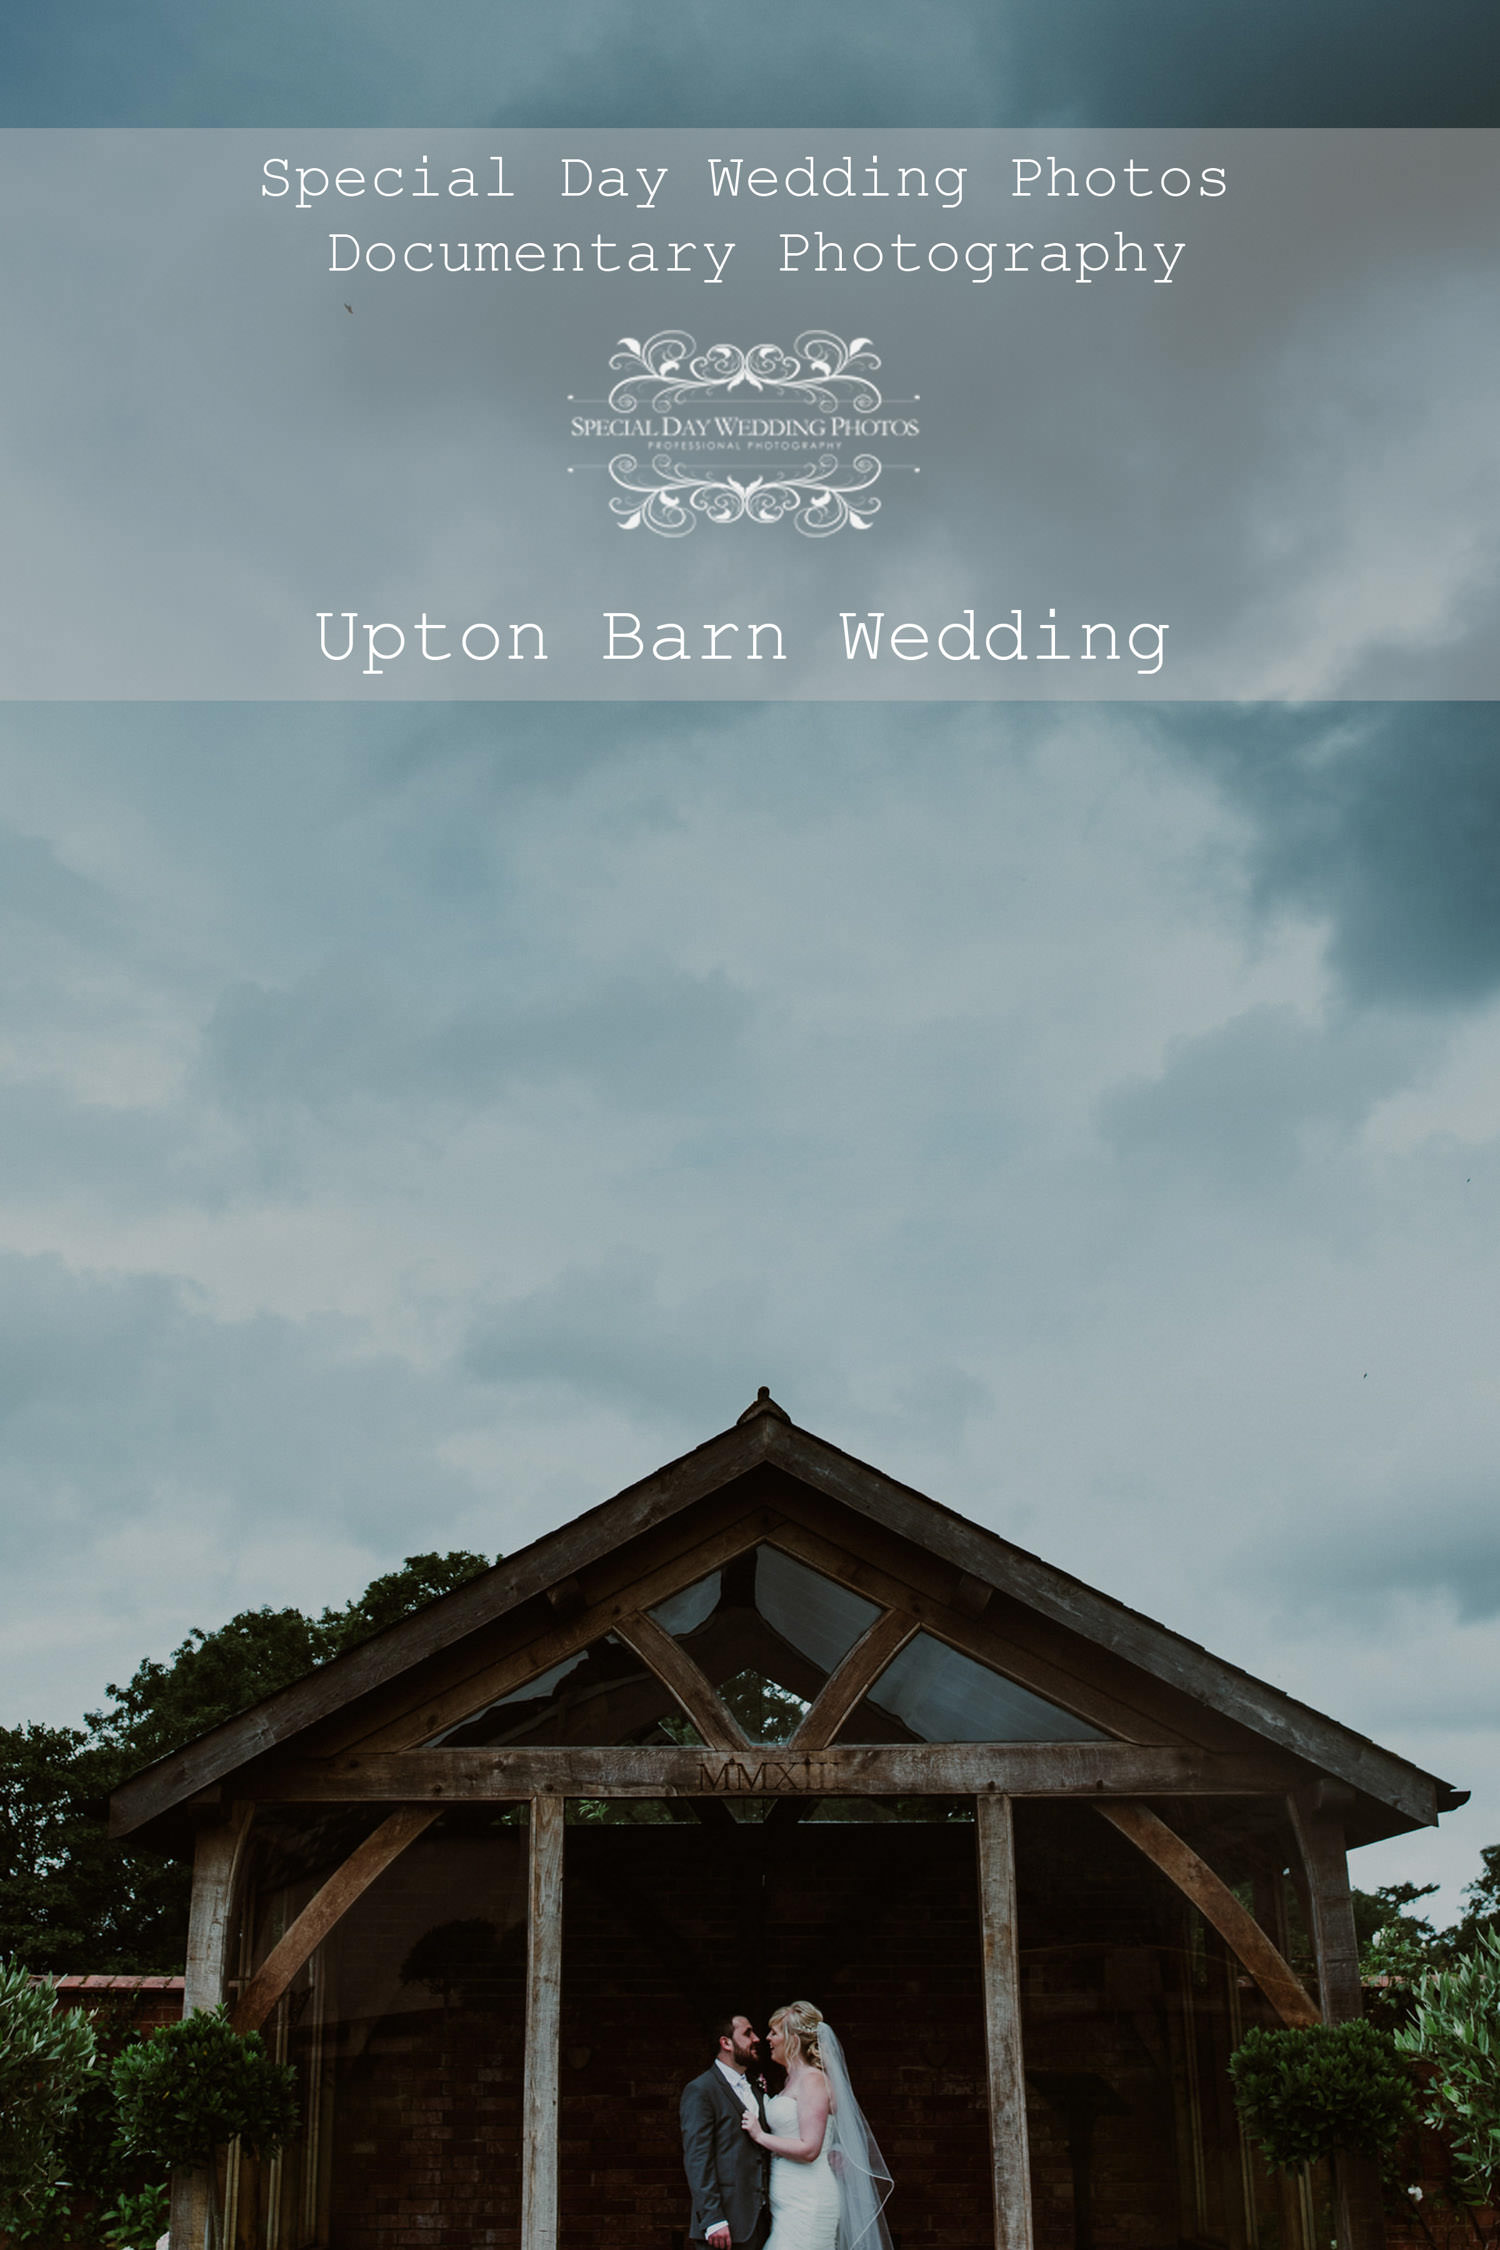 upton barn wedding devon photographer, upton barn wedding photographer